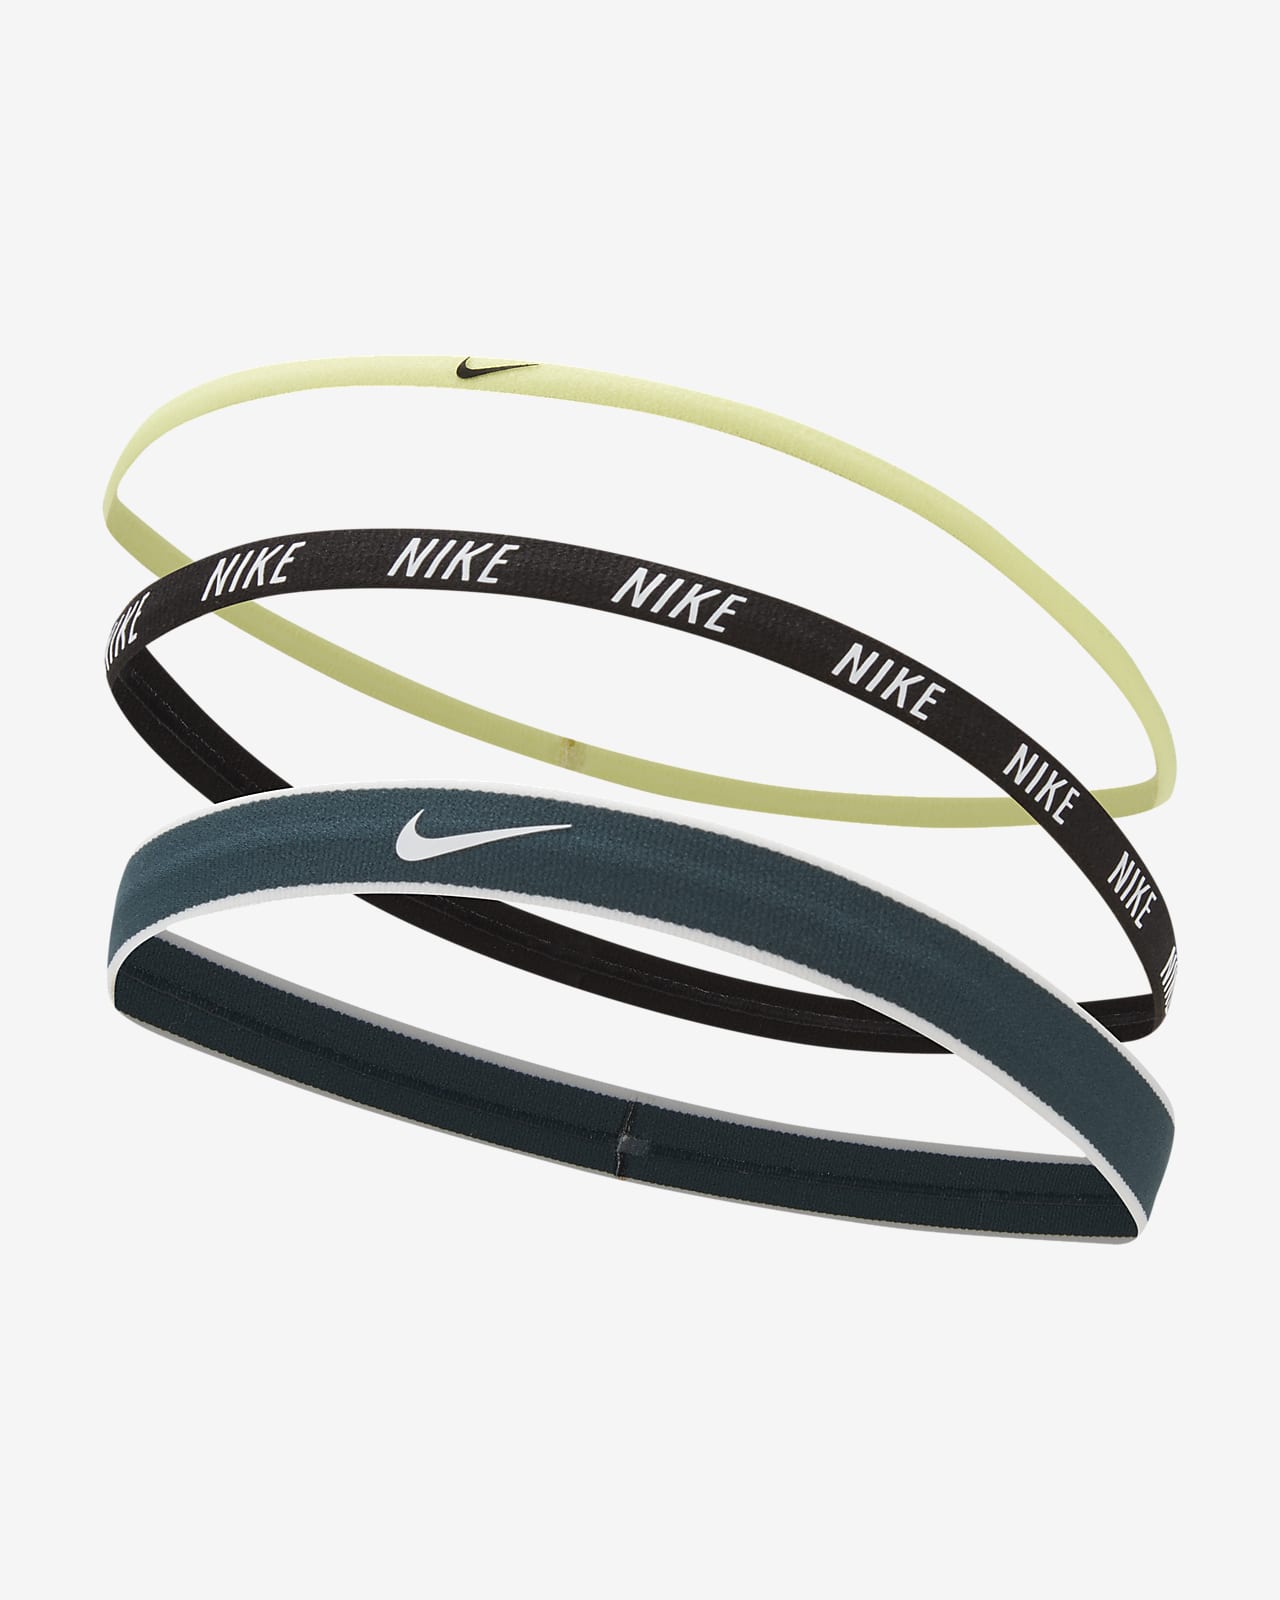 Nike Silicone Fashion Bracelets for sale